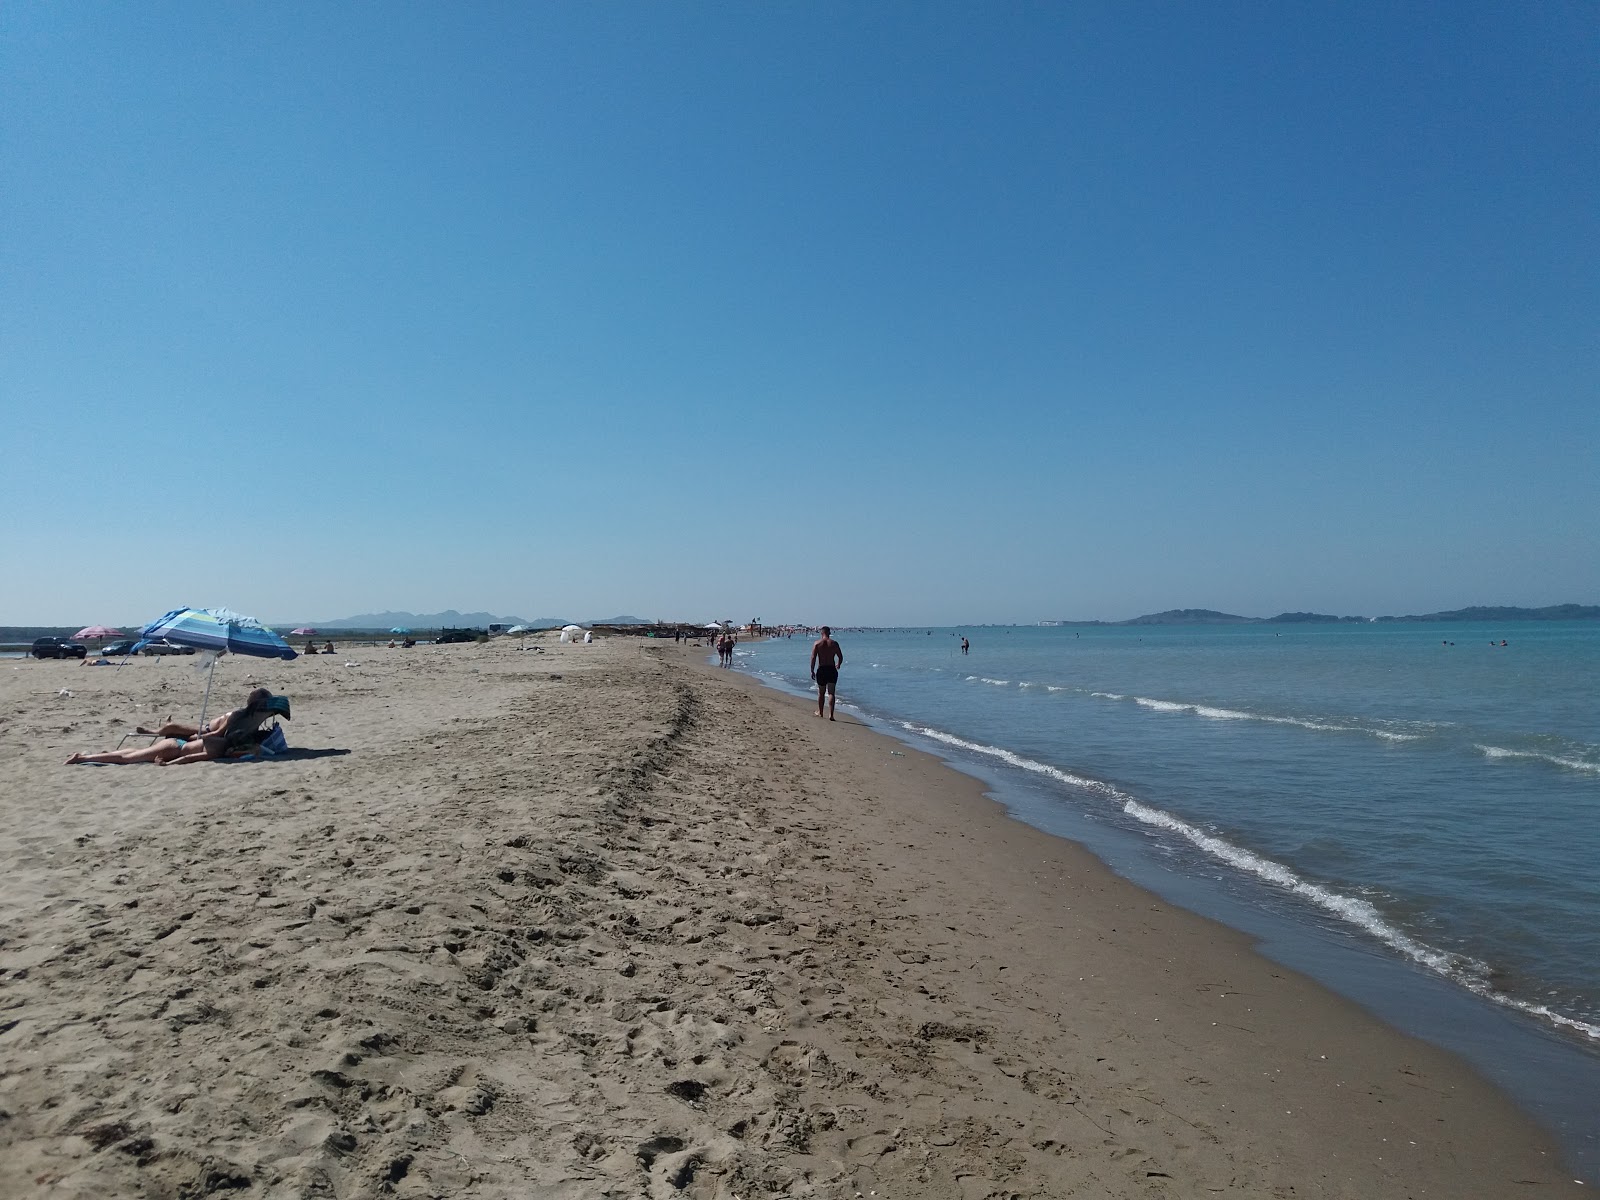 Foto de Cristal Rinia beach - lugar popular entre os apreciadores de relaxamento